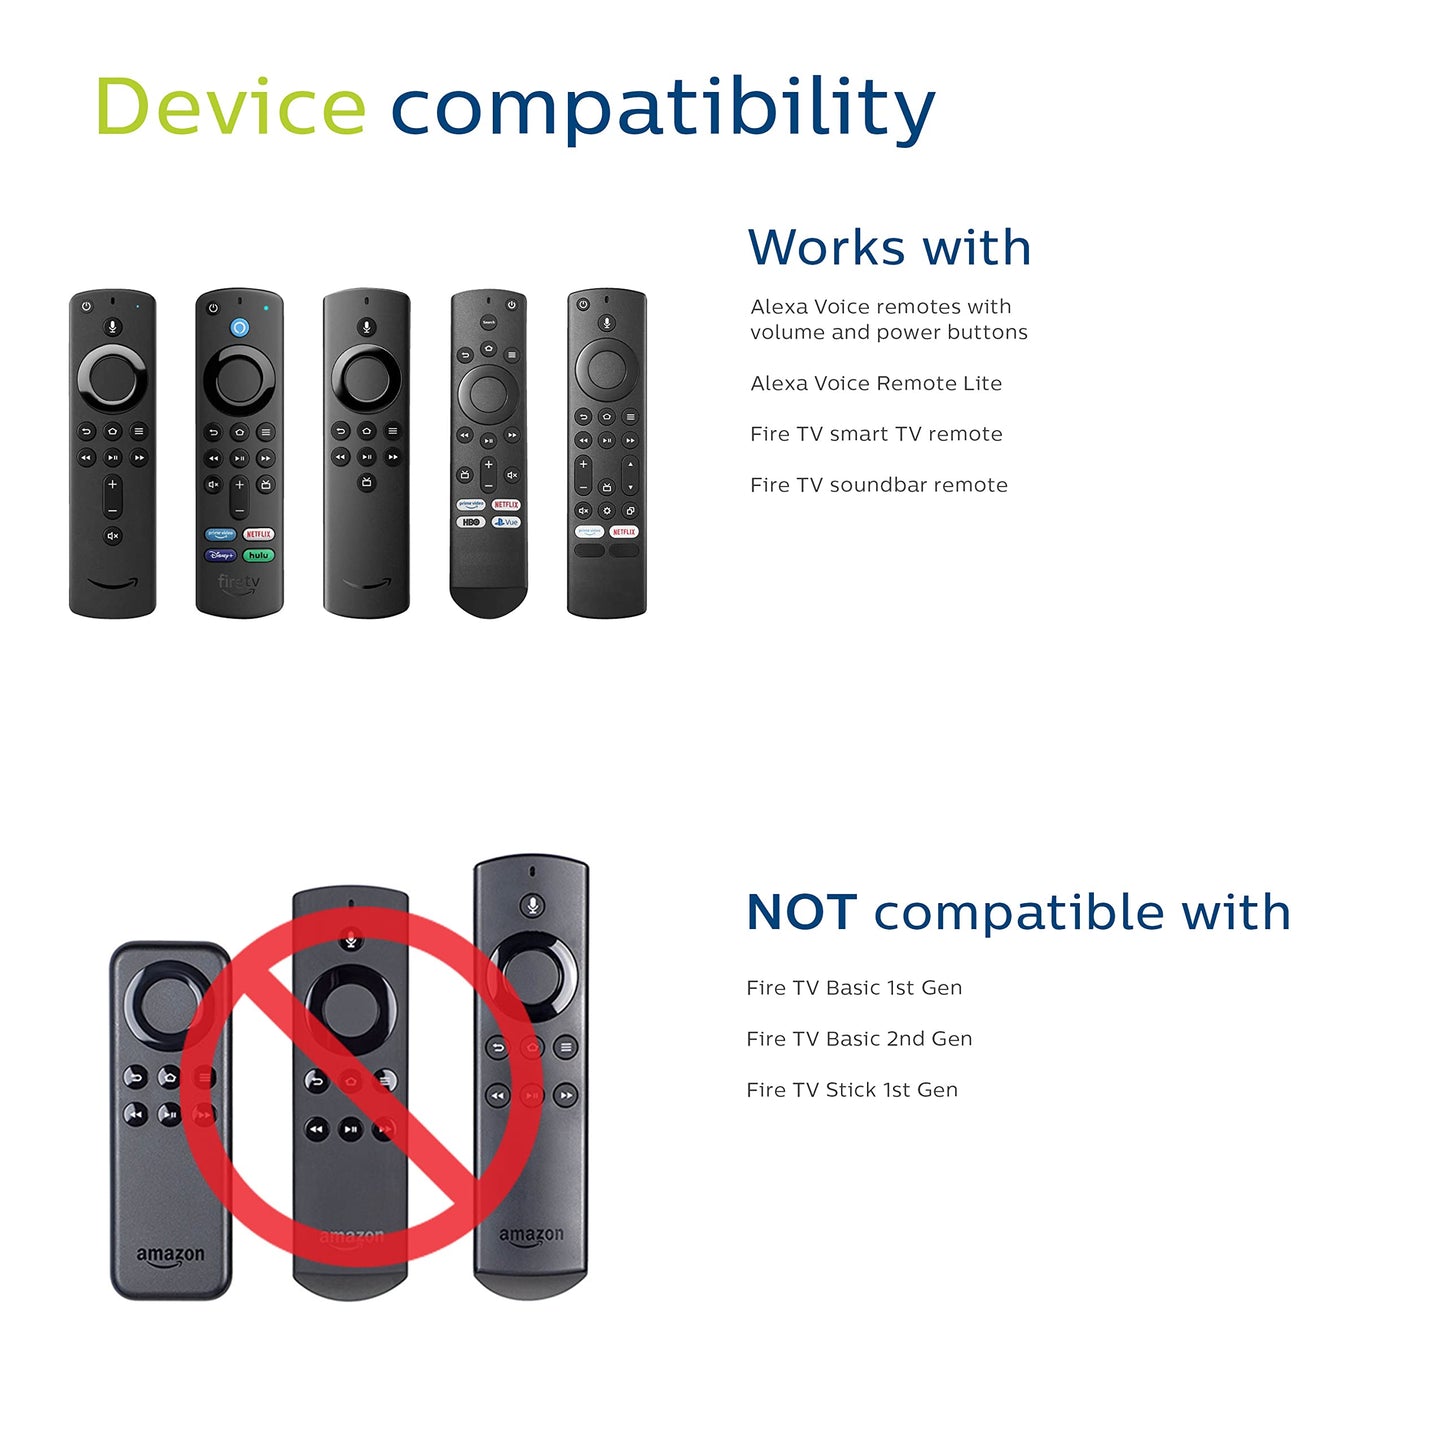 Philips Universal Companion Remote Control for Samsung, Vizio, LG, Sony, Roku, Apple TV, RCA, Panasonic, Smart TVs, Streaming Players, Blu-ray, DVD, 4 Device, Flip & Slide Fire TV, Black, SRP2024A/27